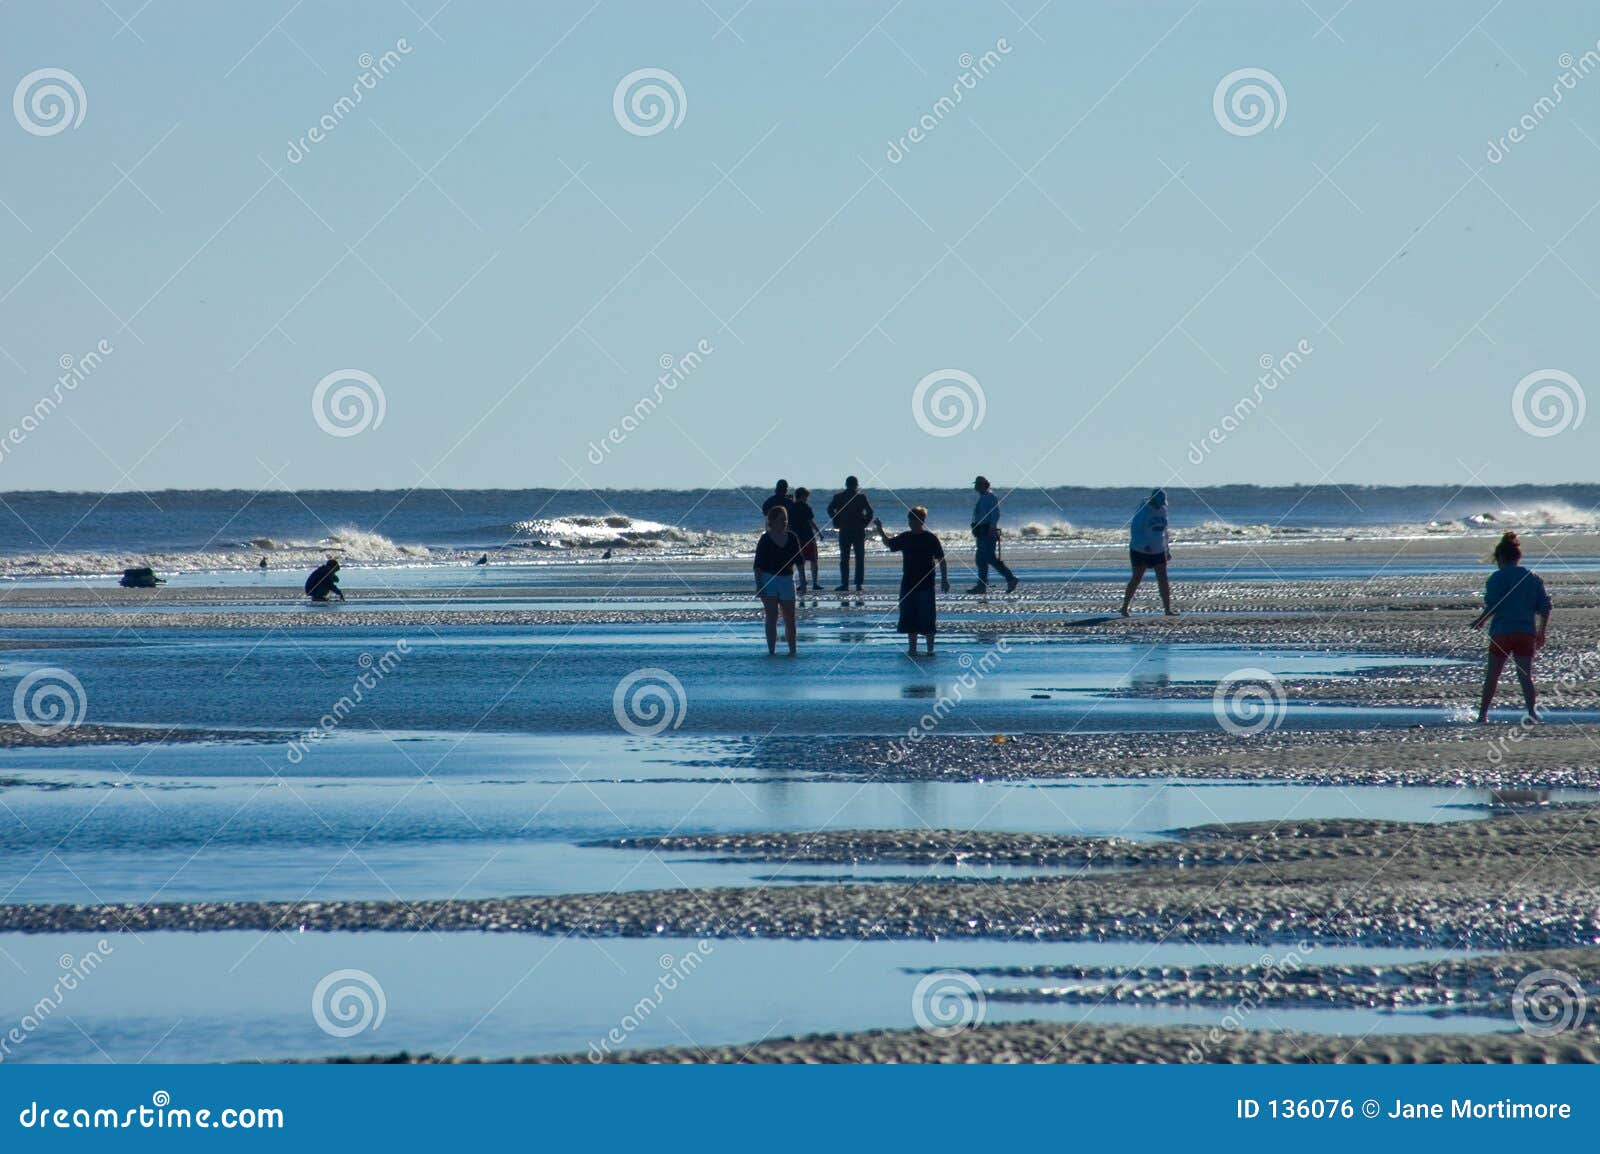 hilton head island beach walkers